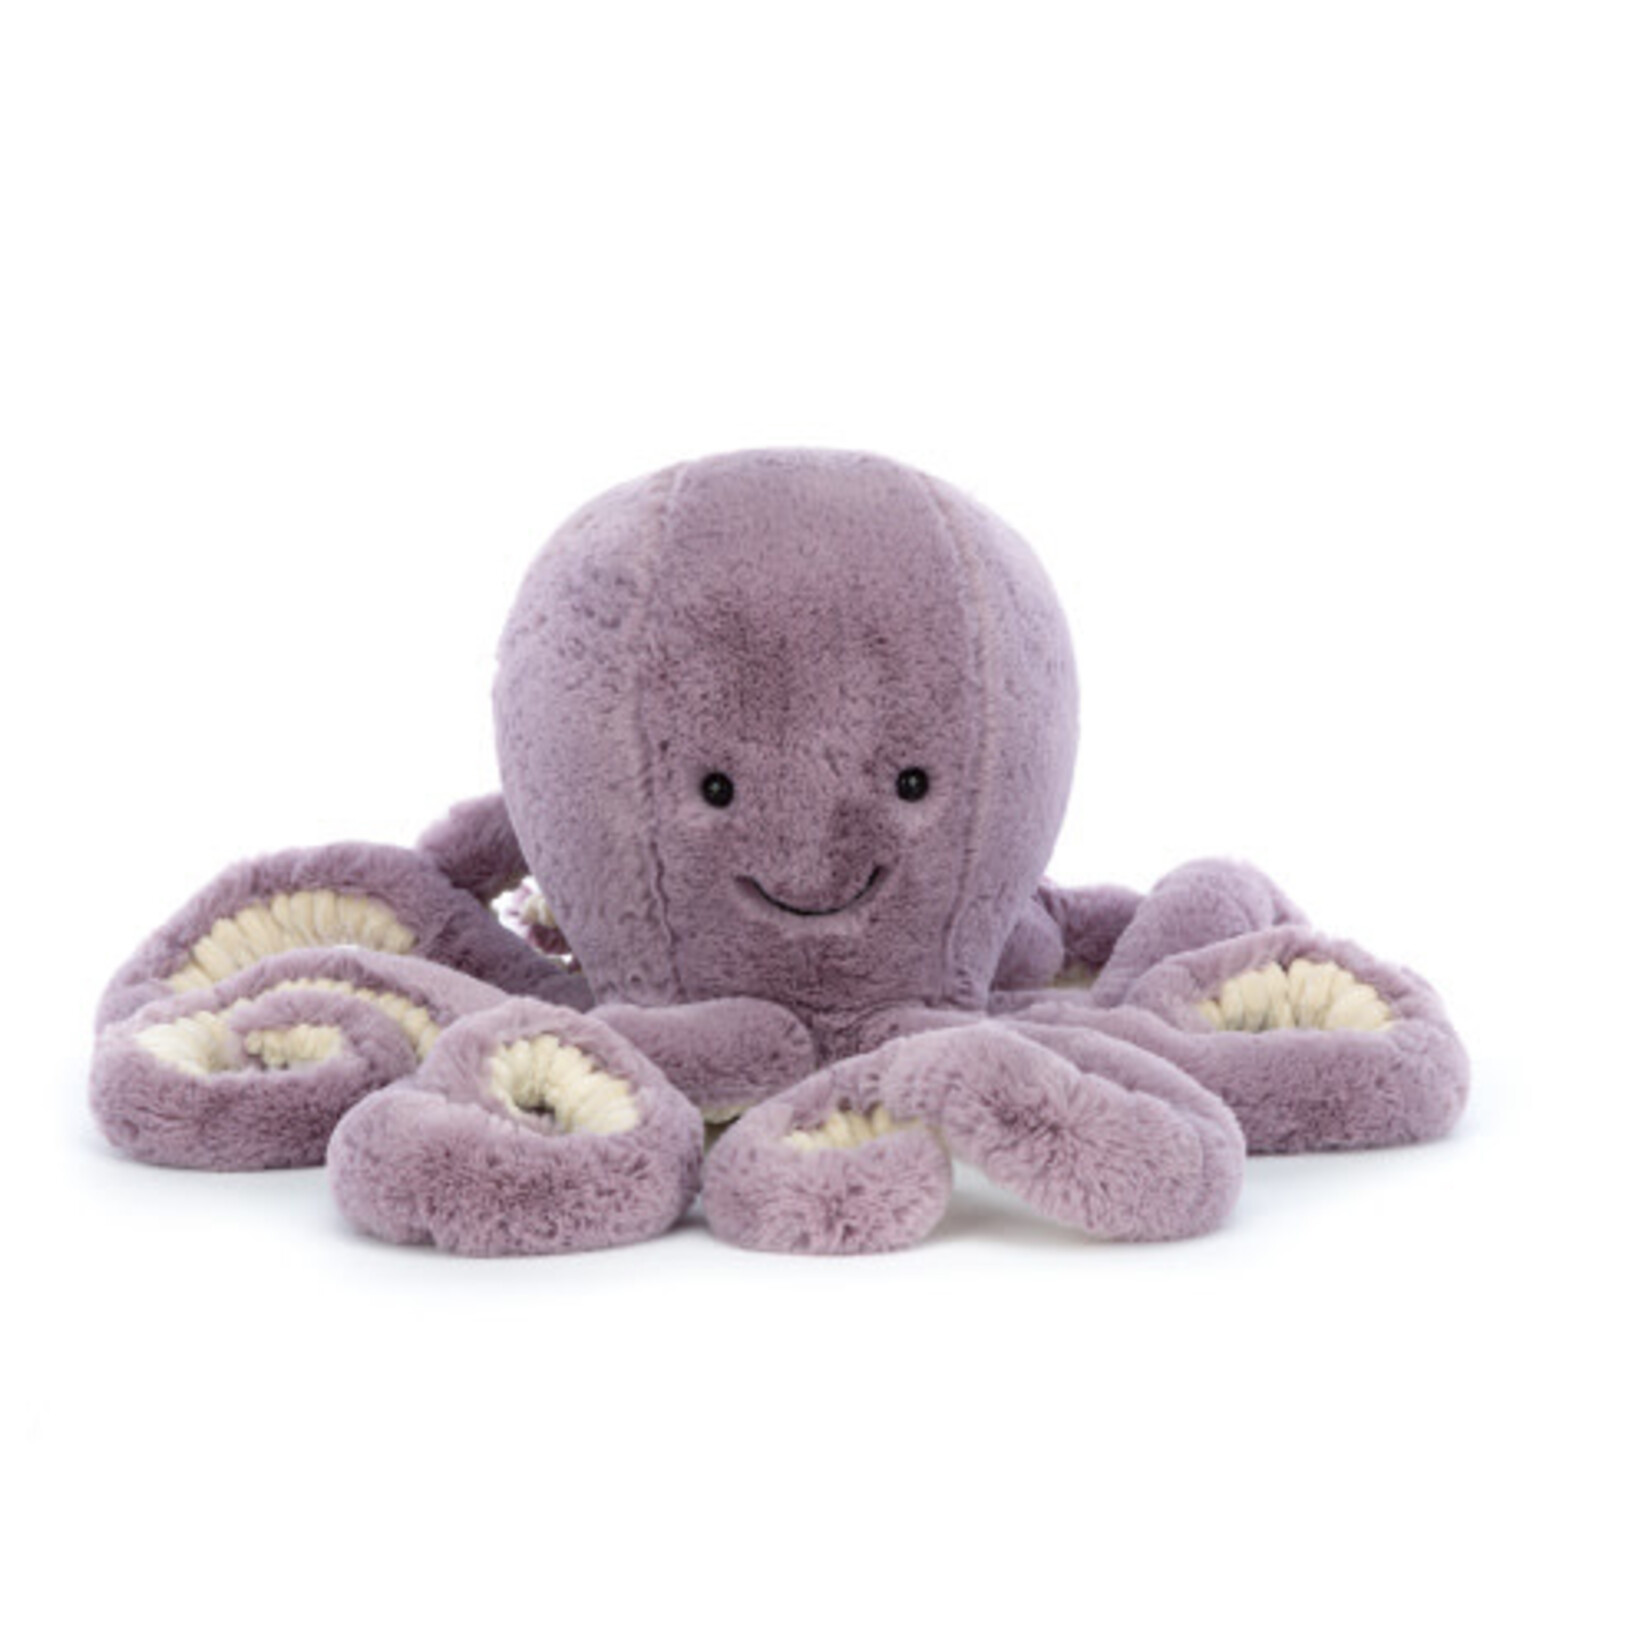 Jellycat Maya Octopus Large